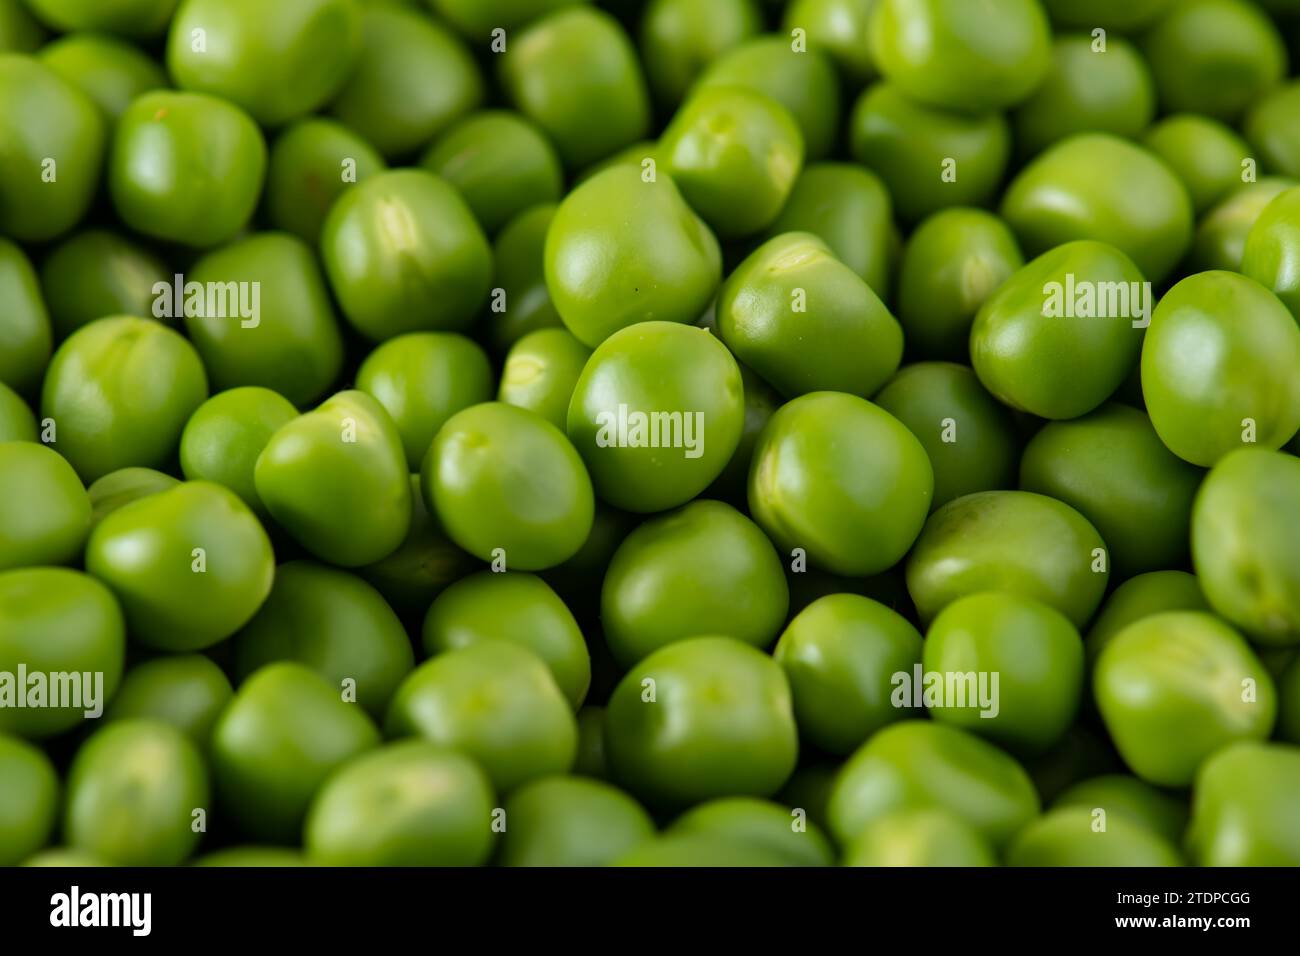 green peeled peas background Stock Photo